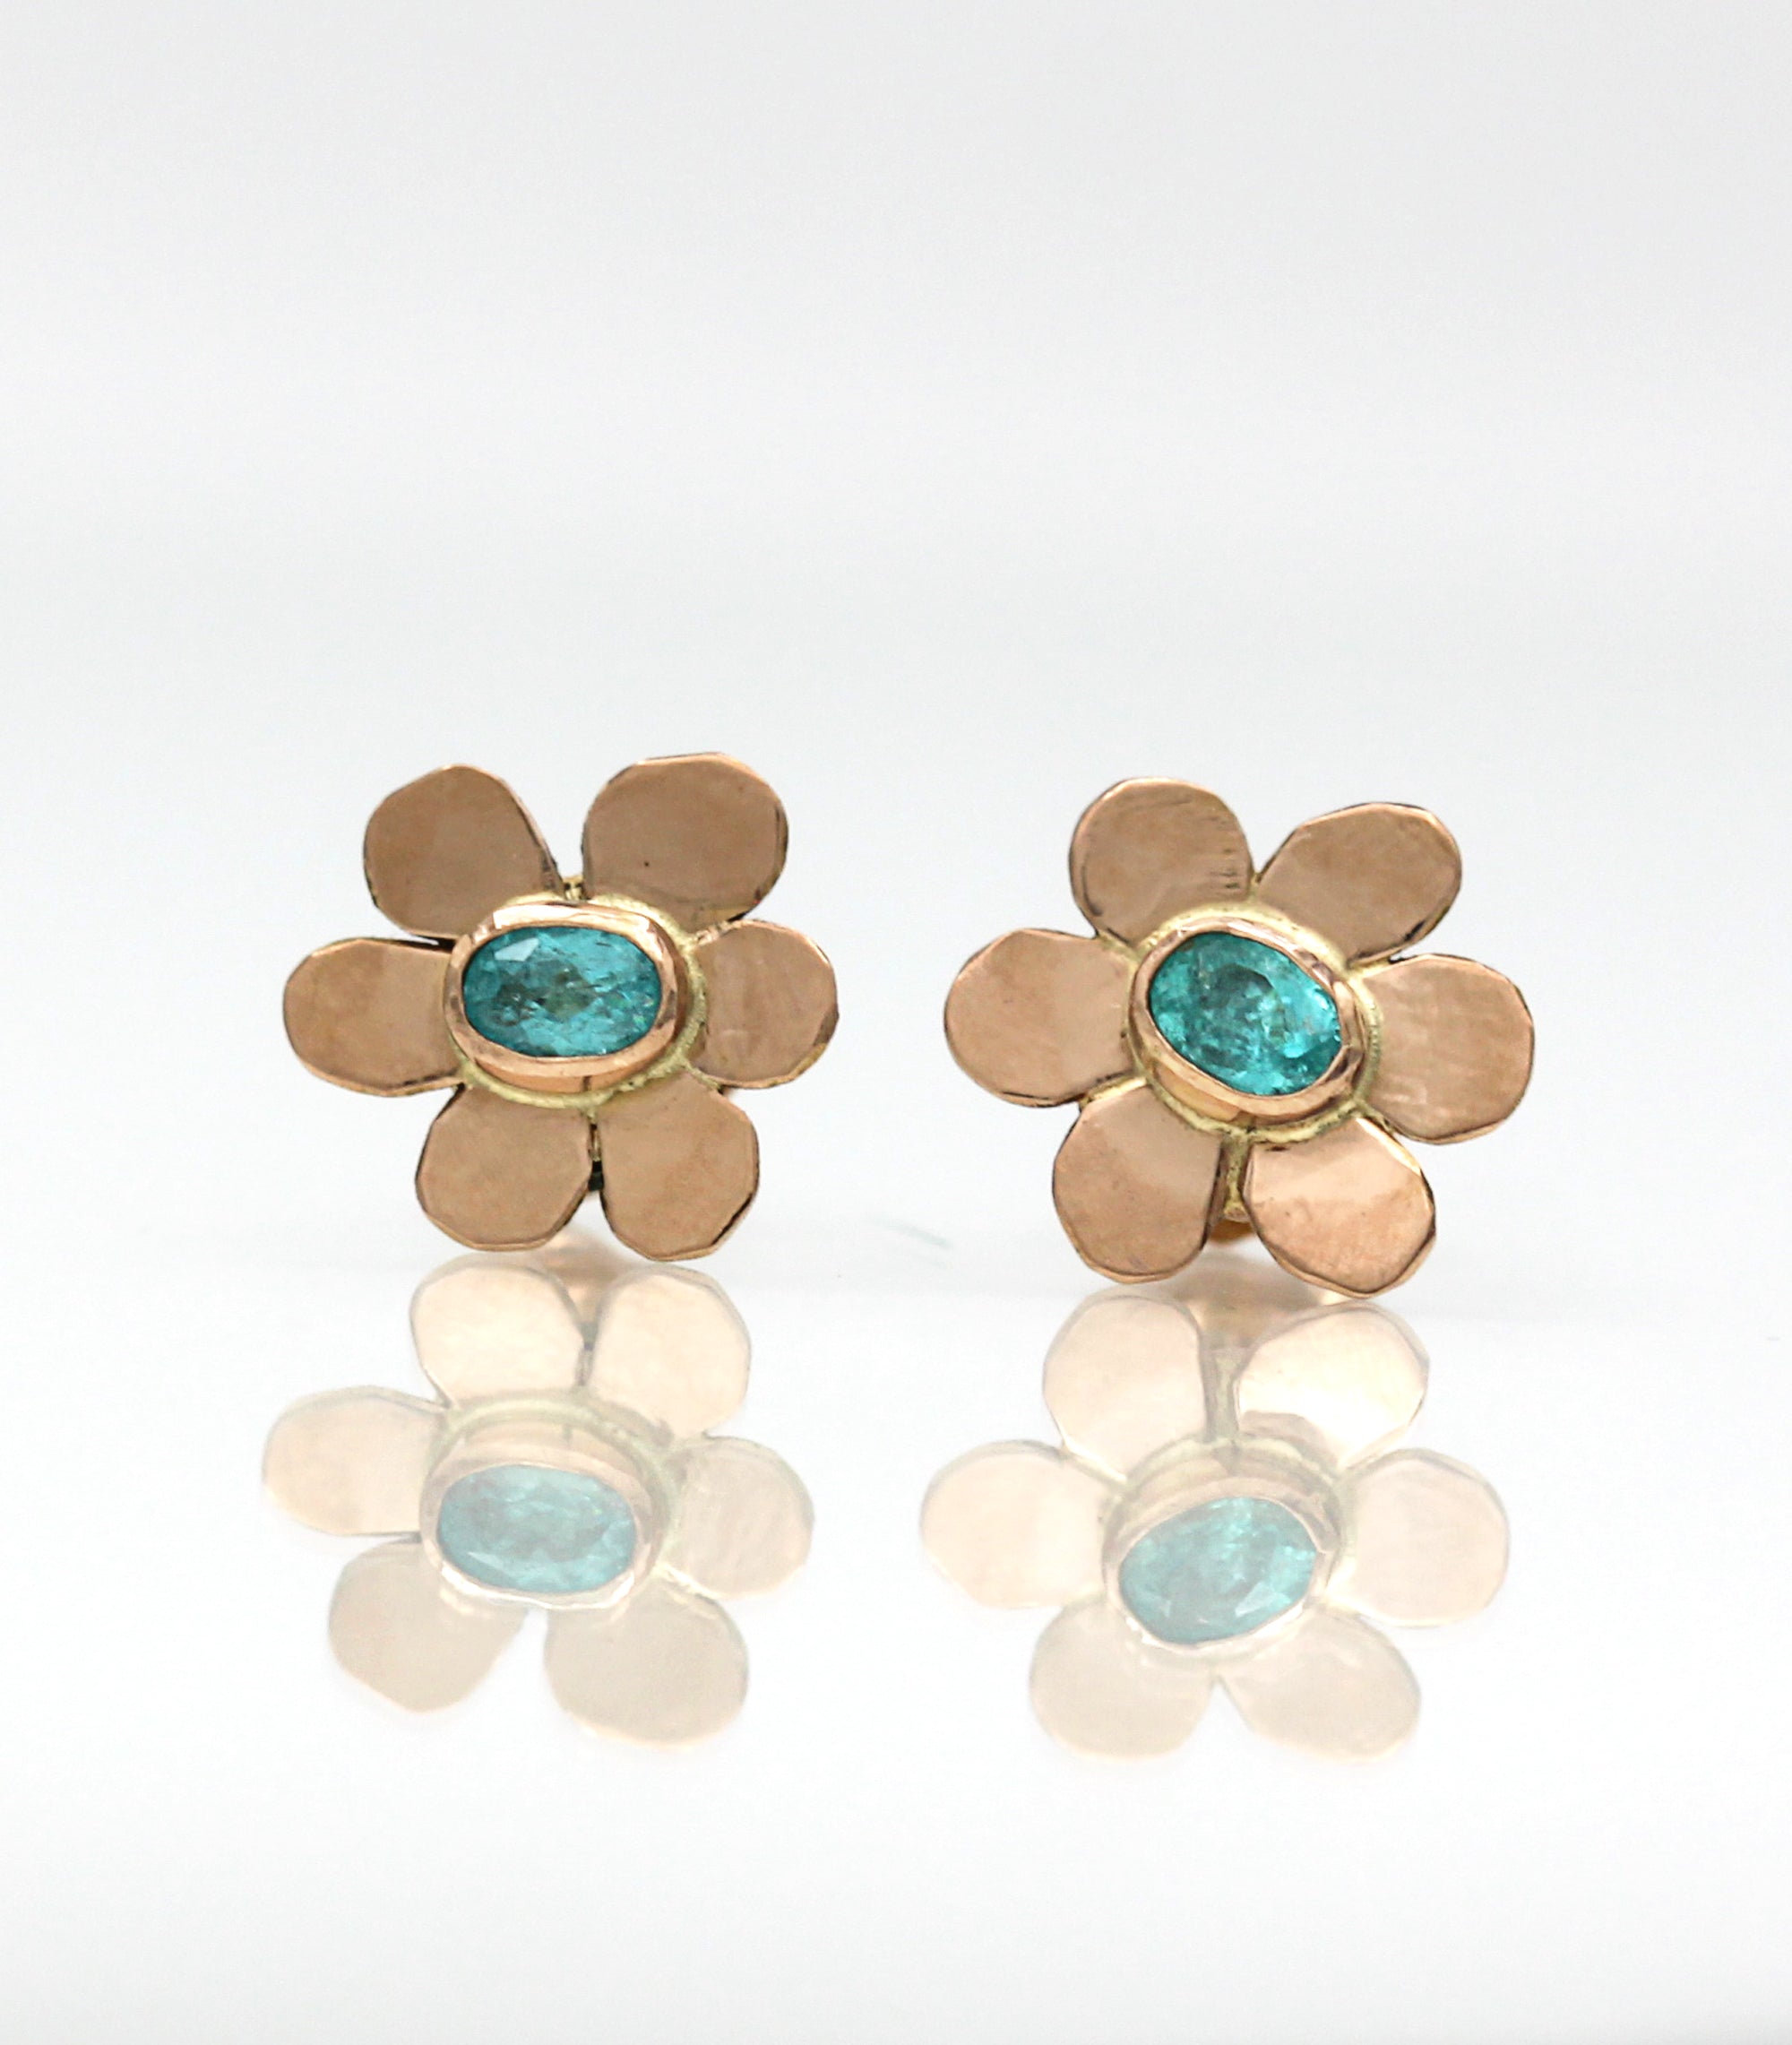 14K Paraiba Tourmaline Earrings, Flower Earrings, One of a kind